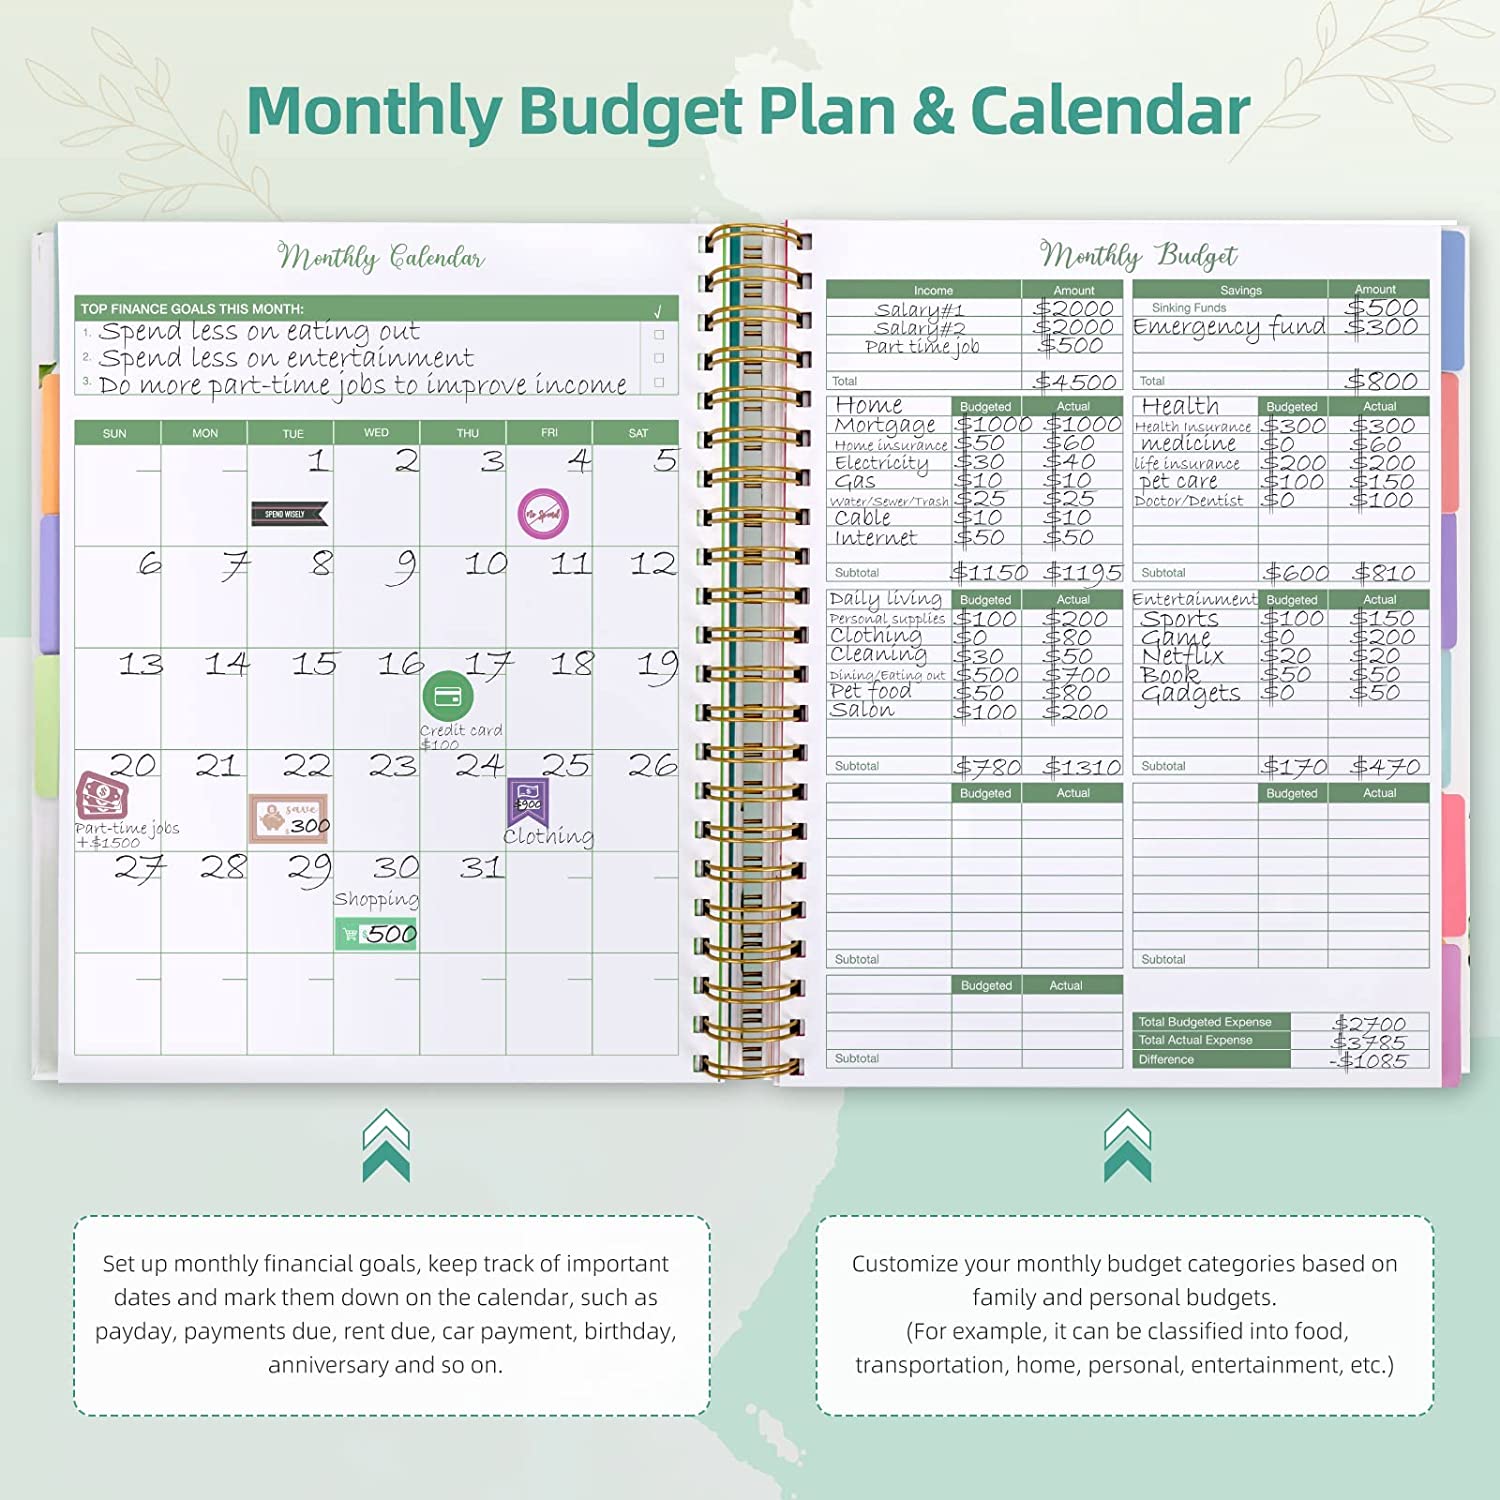 Custom Budget Binder - Make Your Own Budget Binder